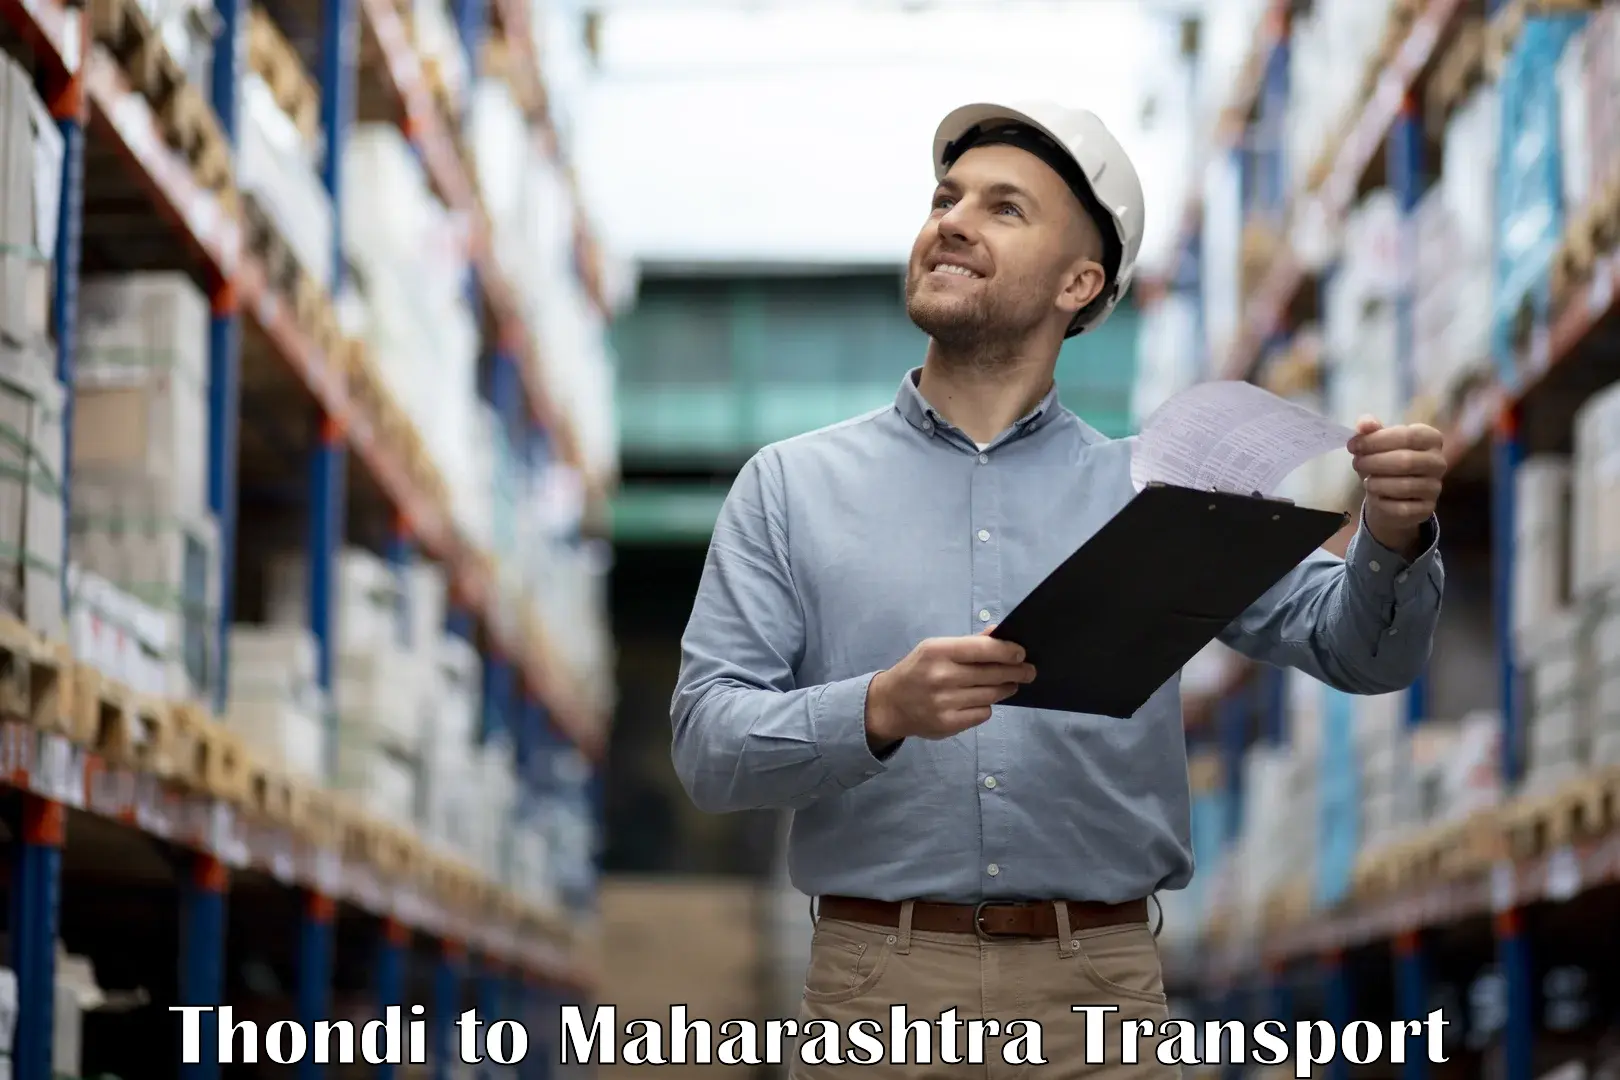 Sending bike to another city Thondi to Maharashtra